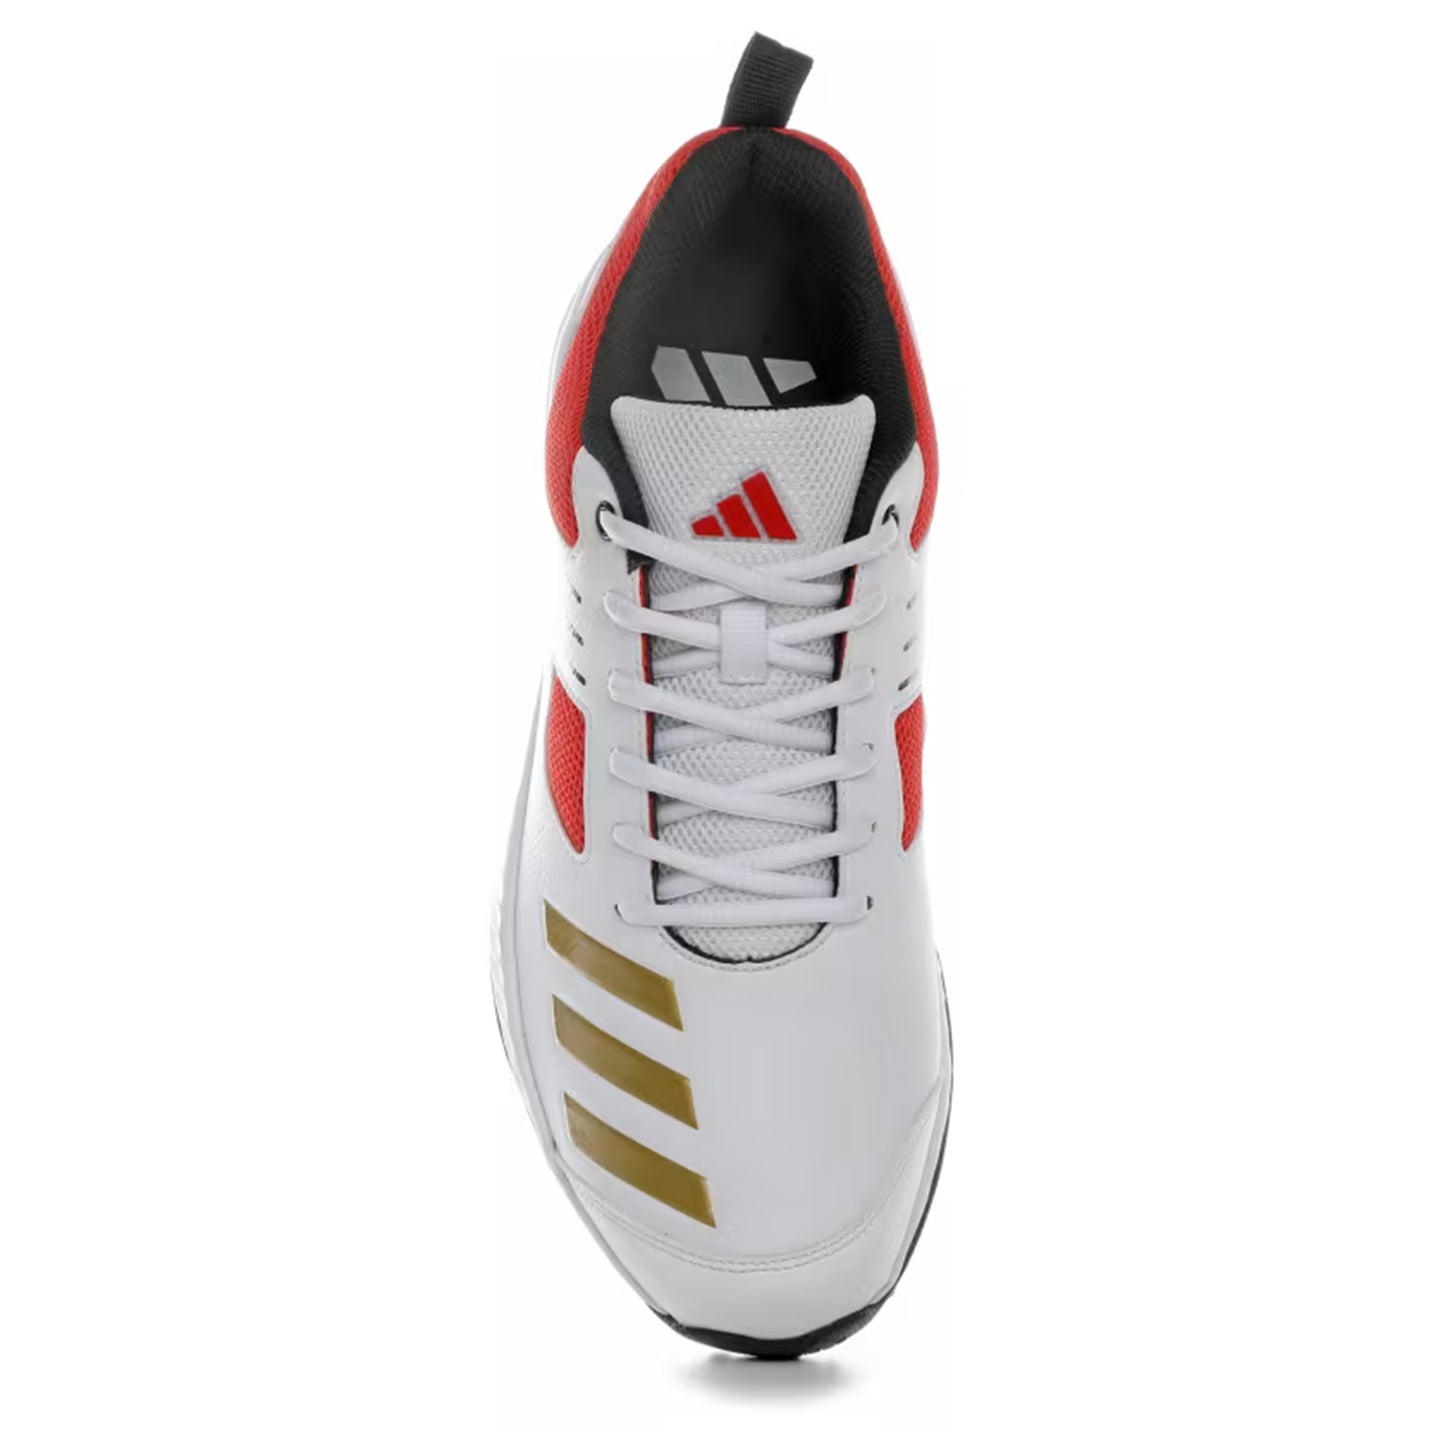 Adidas Crihase 23 Mens Cricket Shoes - Best Price online Prokicksports.com